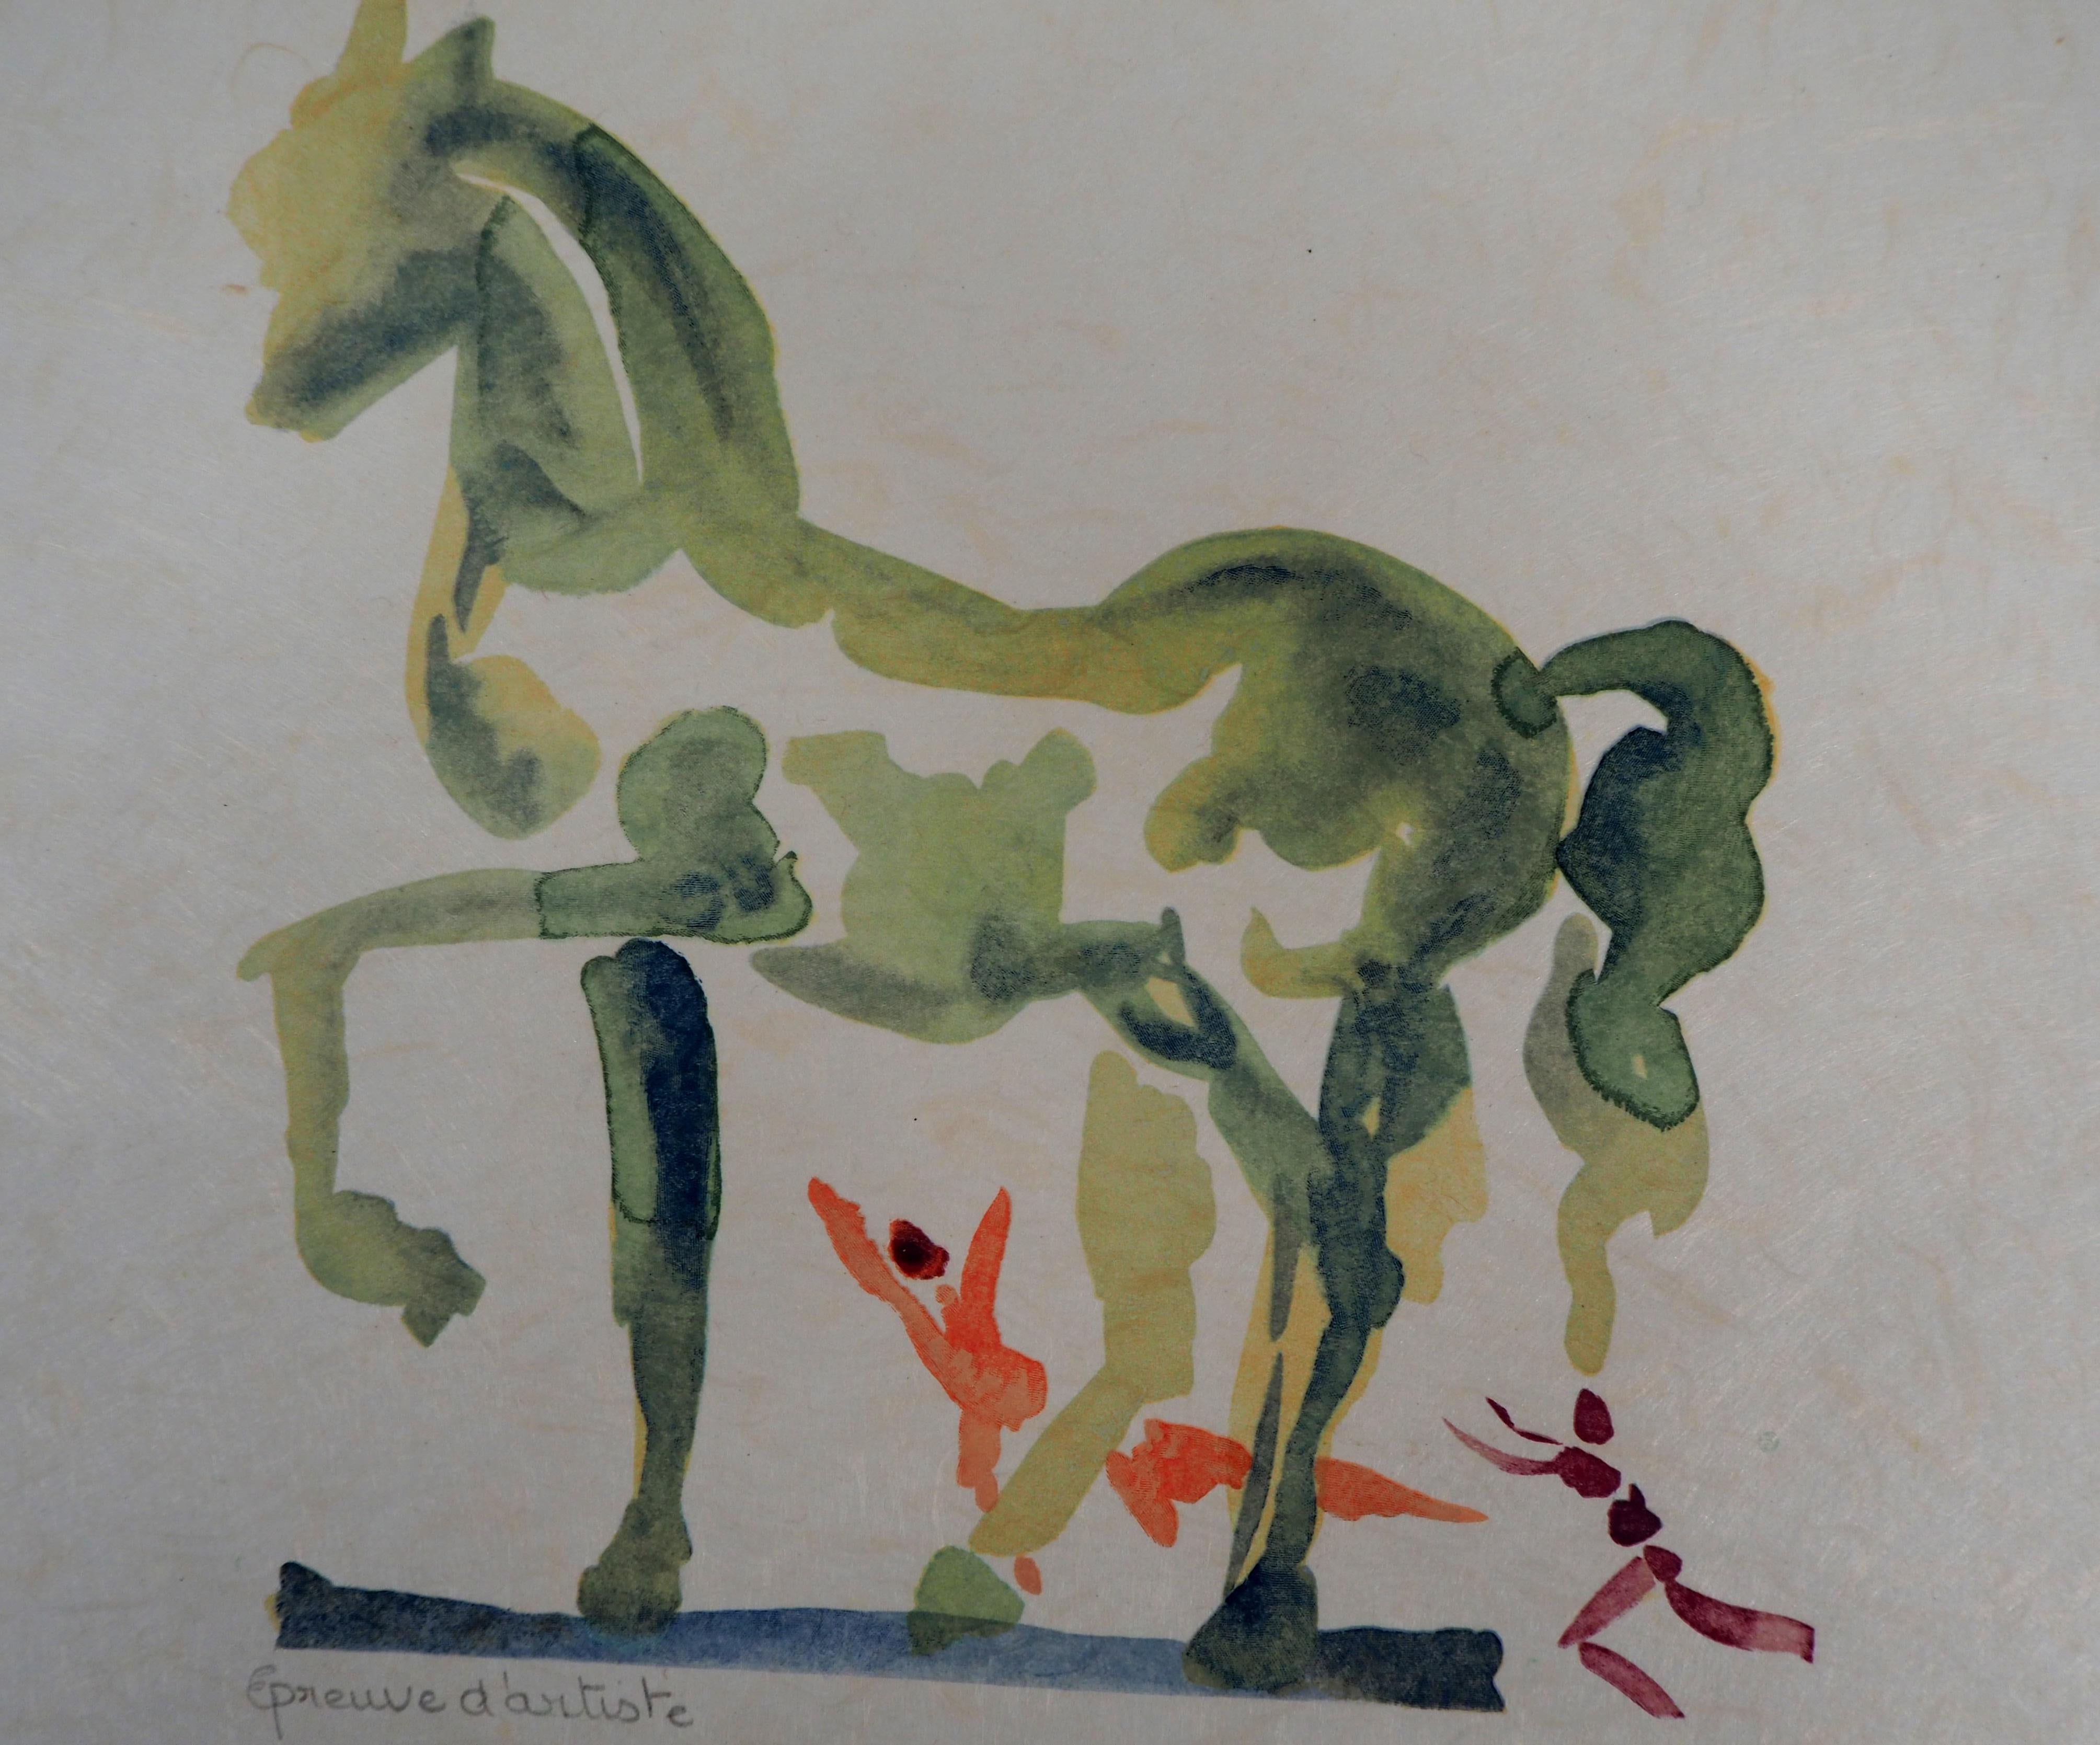  The Battle (Trojan Horse) - Original Woodcut, Handsigned (Field #79-2 L) - Surrealist Print by Salvador Dalí